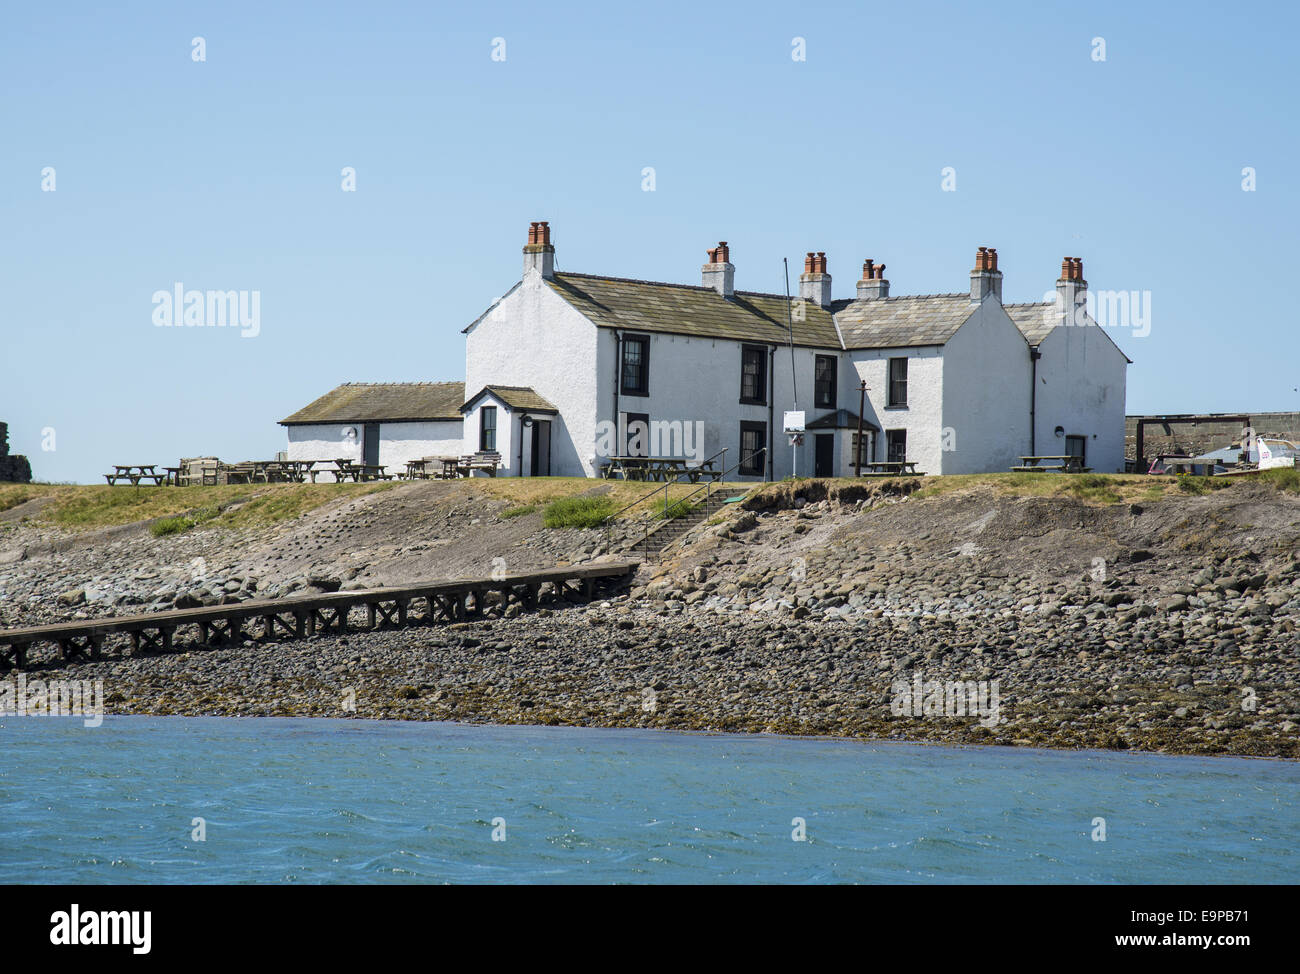 View of causeway and 18th century public house near coast, The Ship Inn, Piel Channel, Piel Island, Islands of Furness, Barrow-in-Furness, Cumbria, England, July Stock Photo